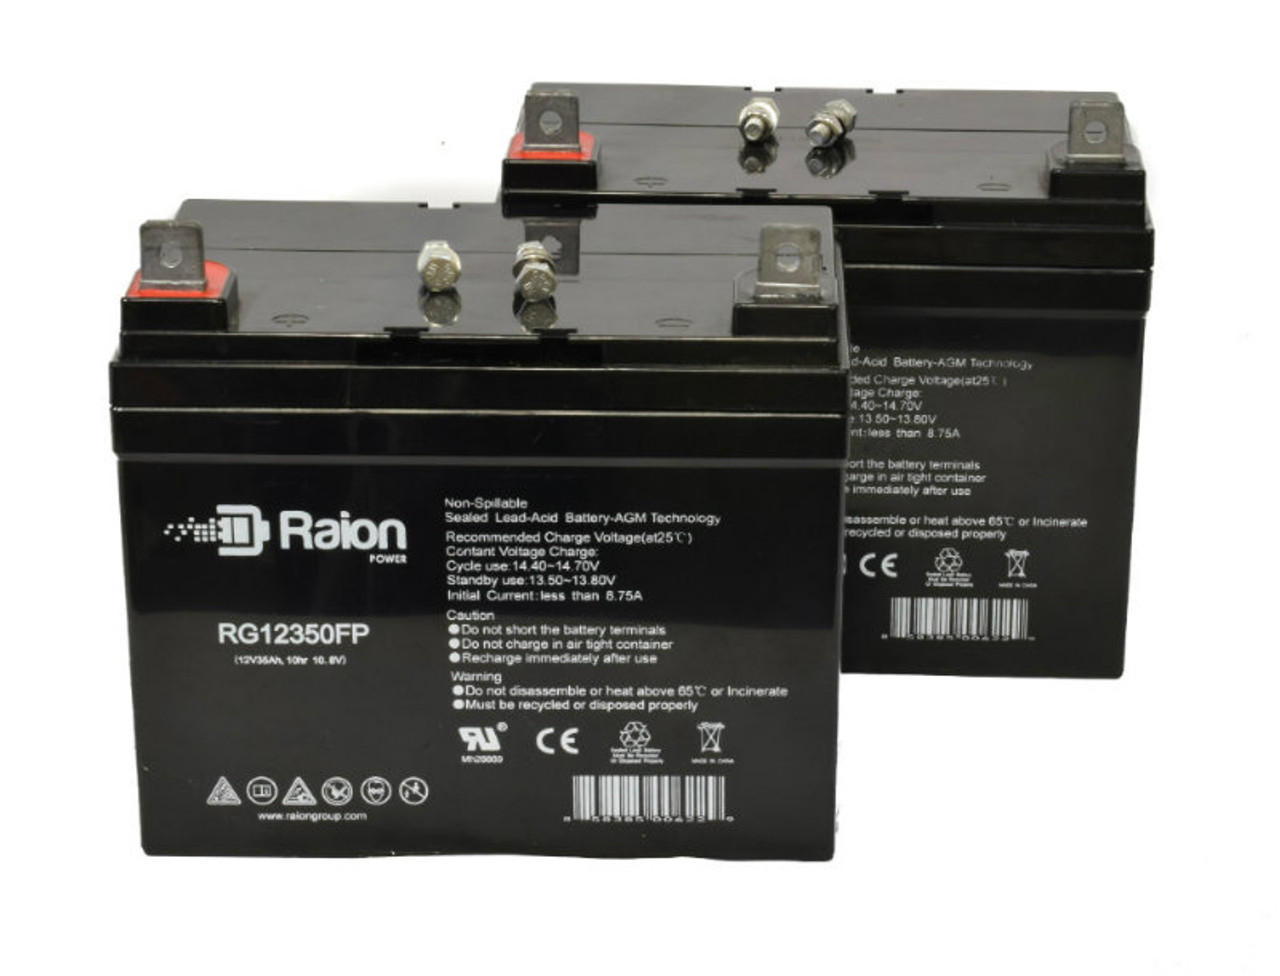 Raion Power Replacement 12V 35Ah Lawn Mower Battery for John Deere STX30 - 2 Pack